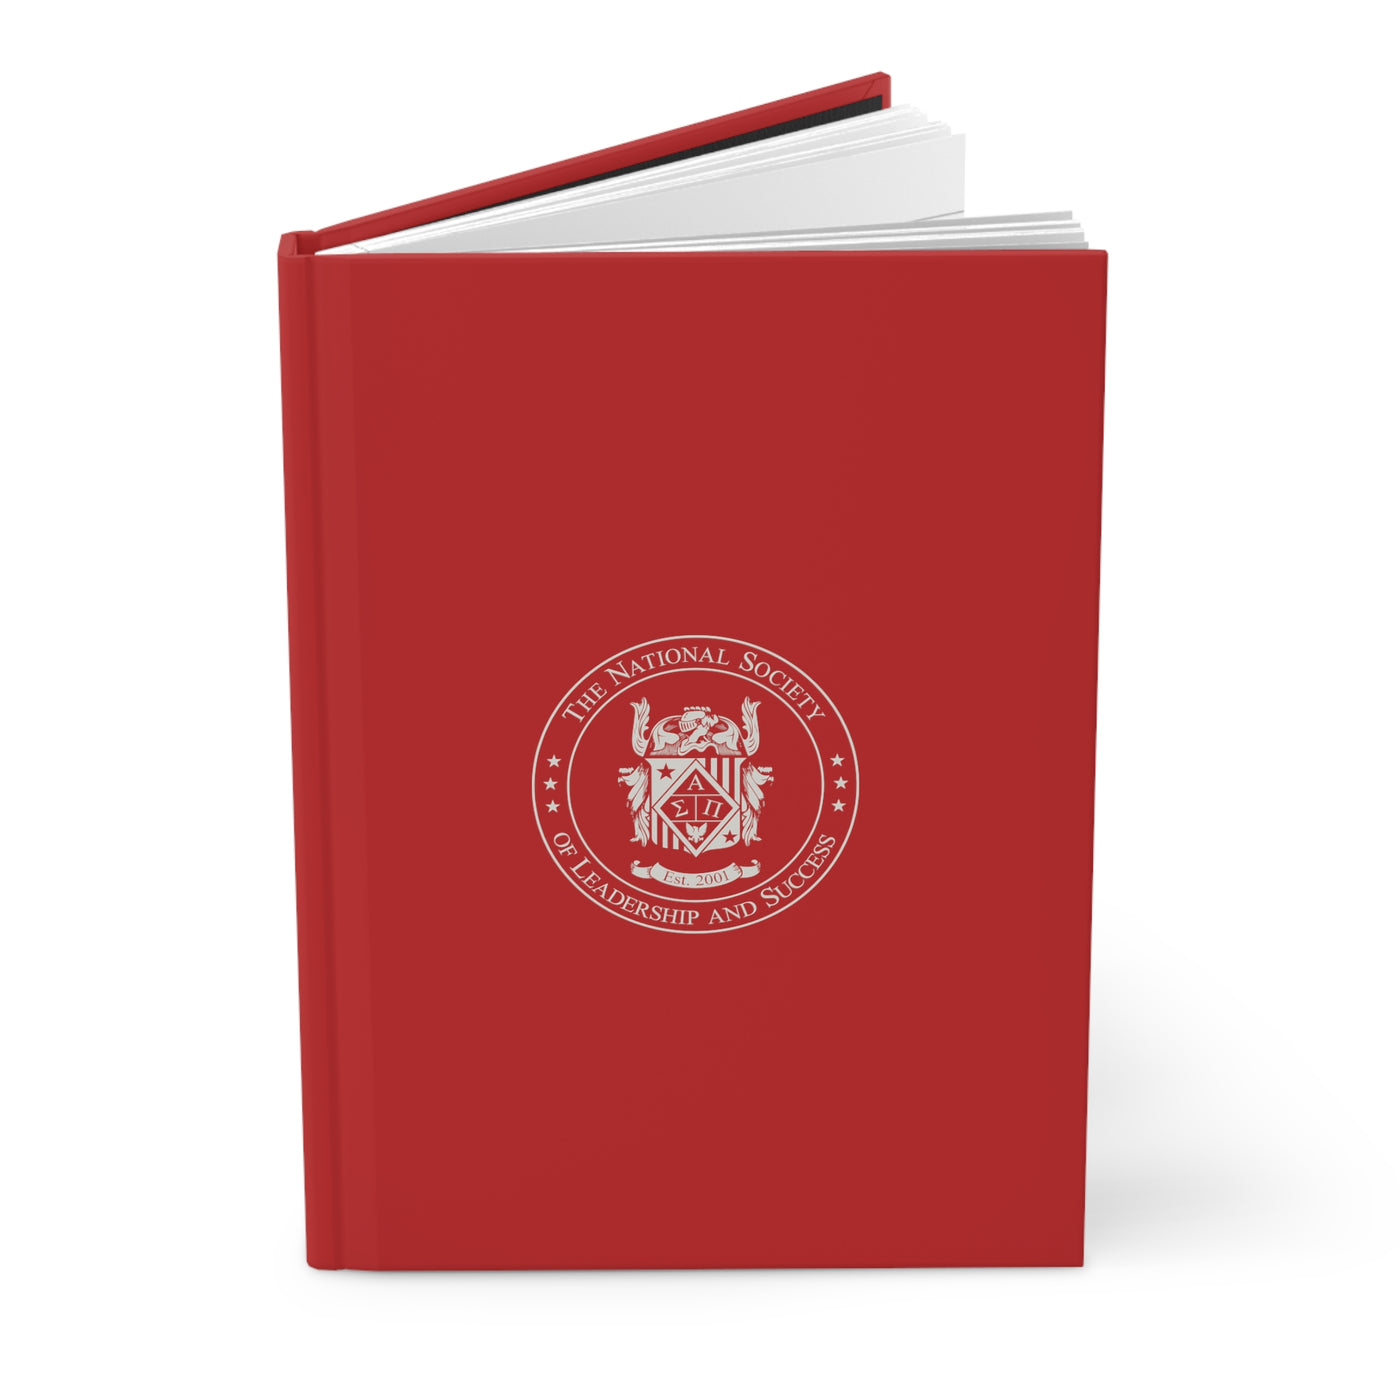 NSLS Seal Hardcover Journal Matte - Red